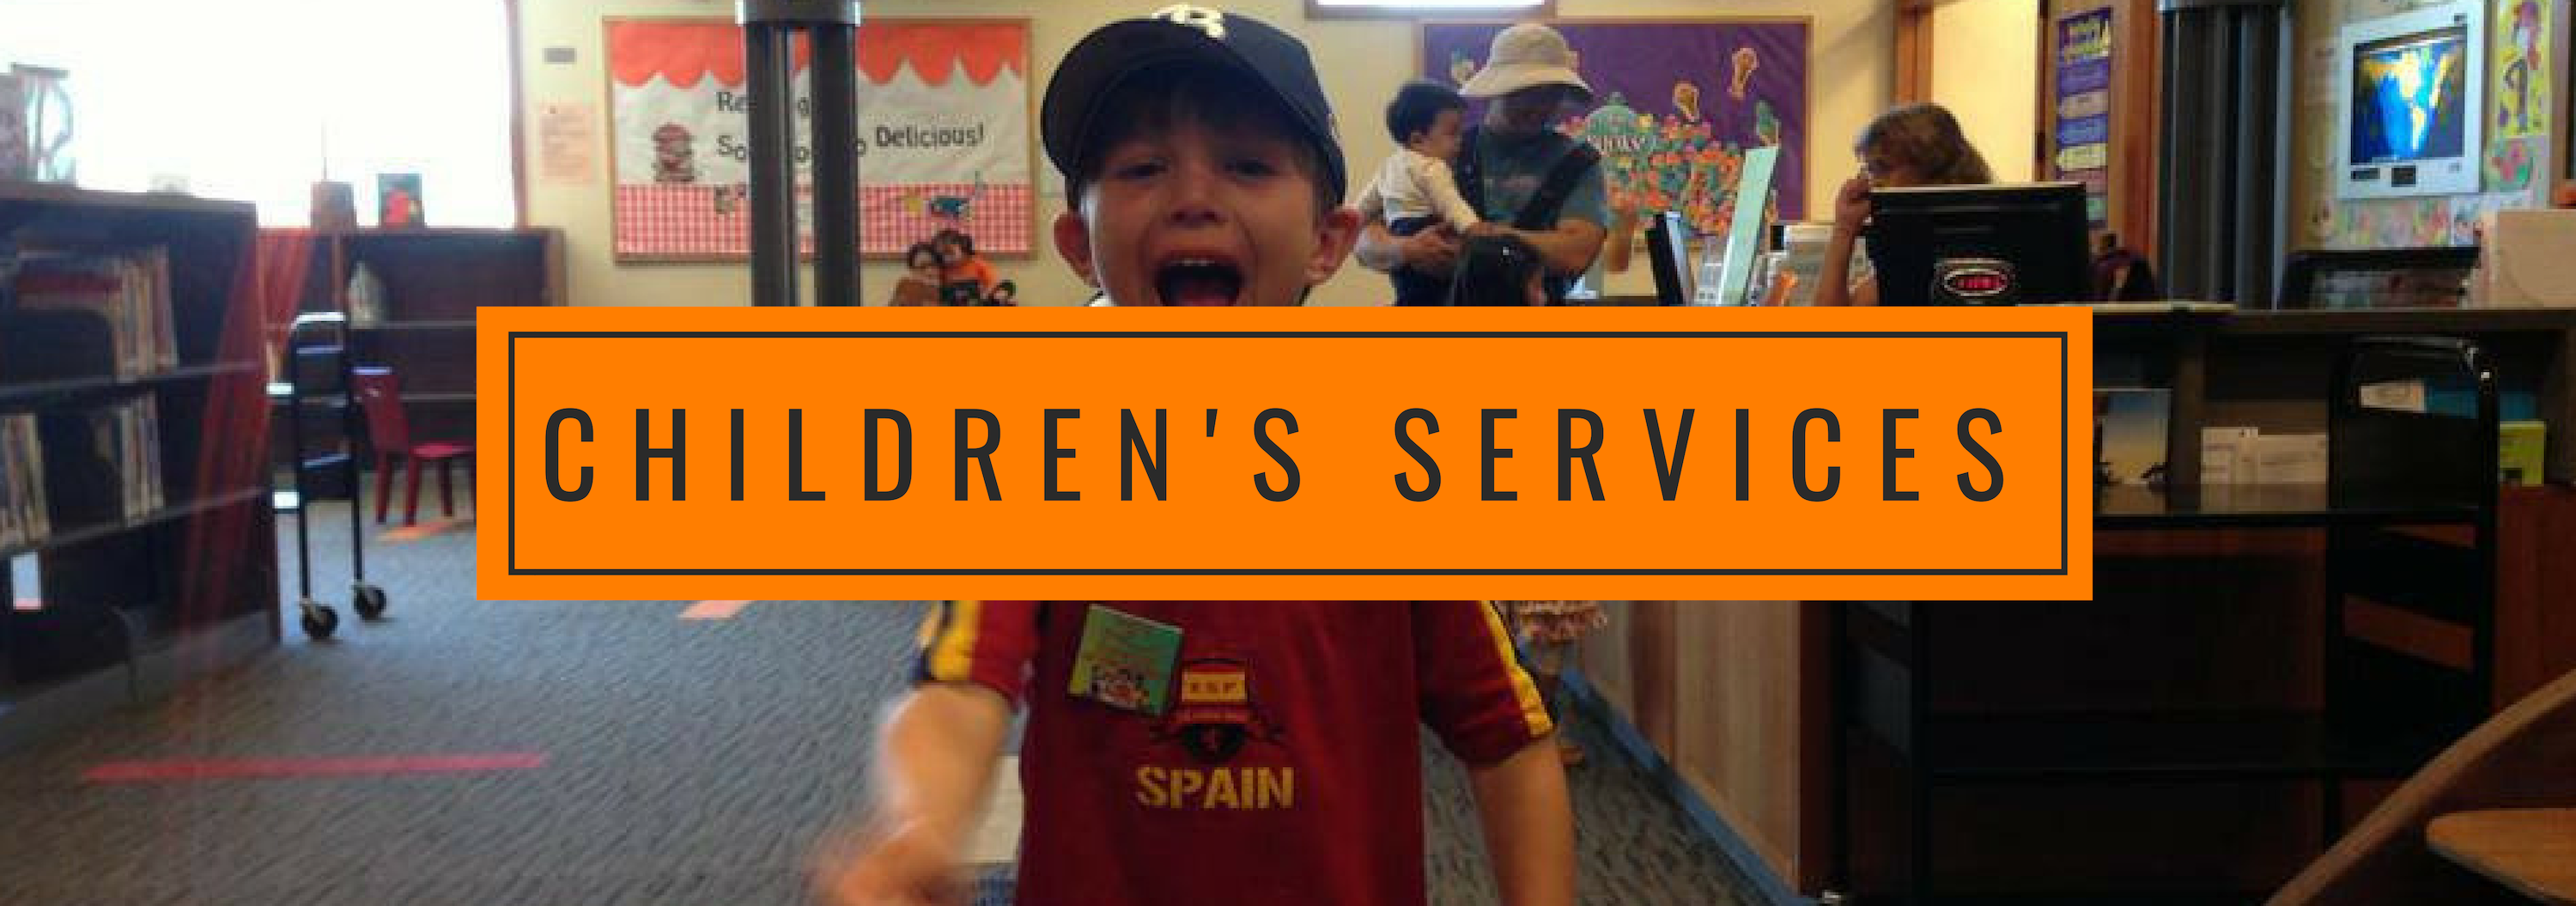 Children's Services 1.png